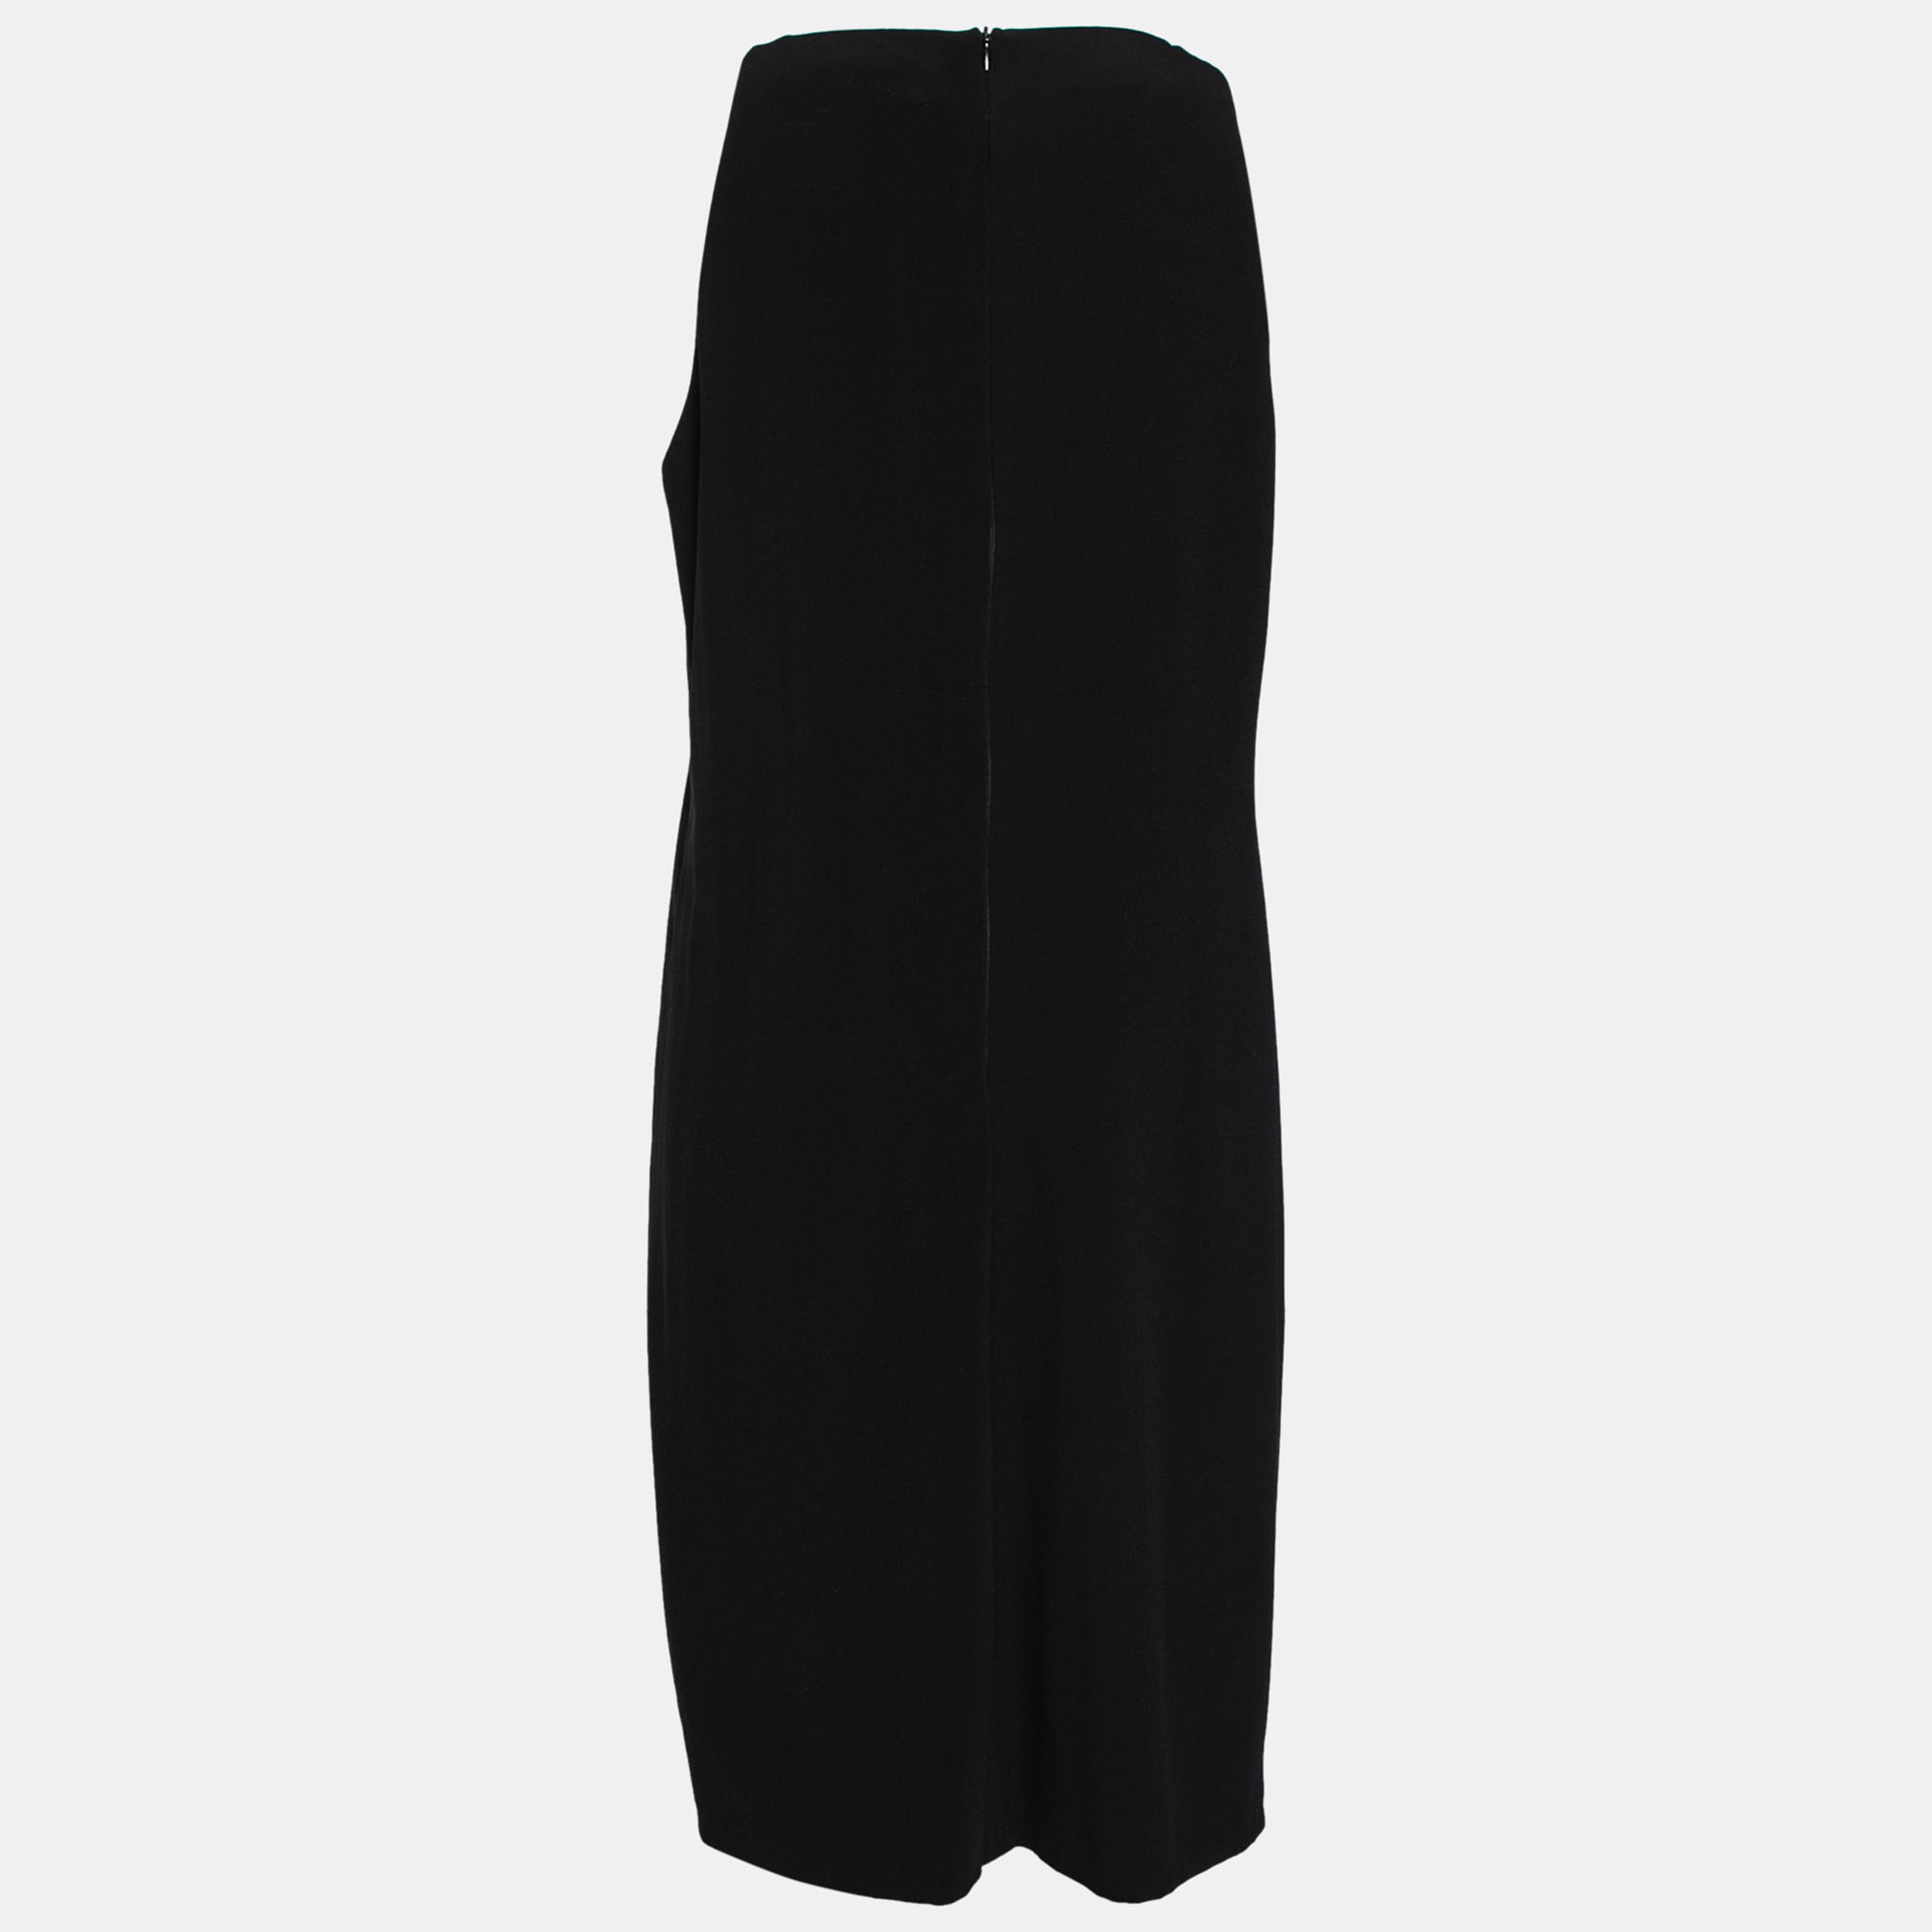 

Moschino Cheap and Chic Black Crepe Printed Sleeveless Dress